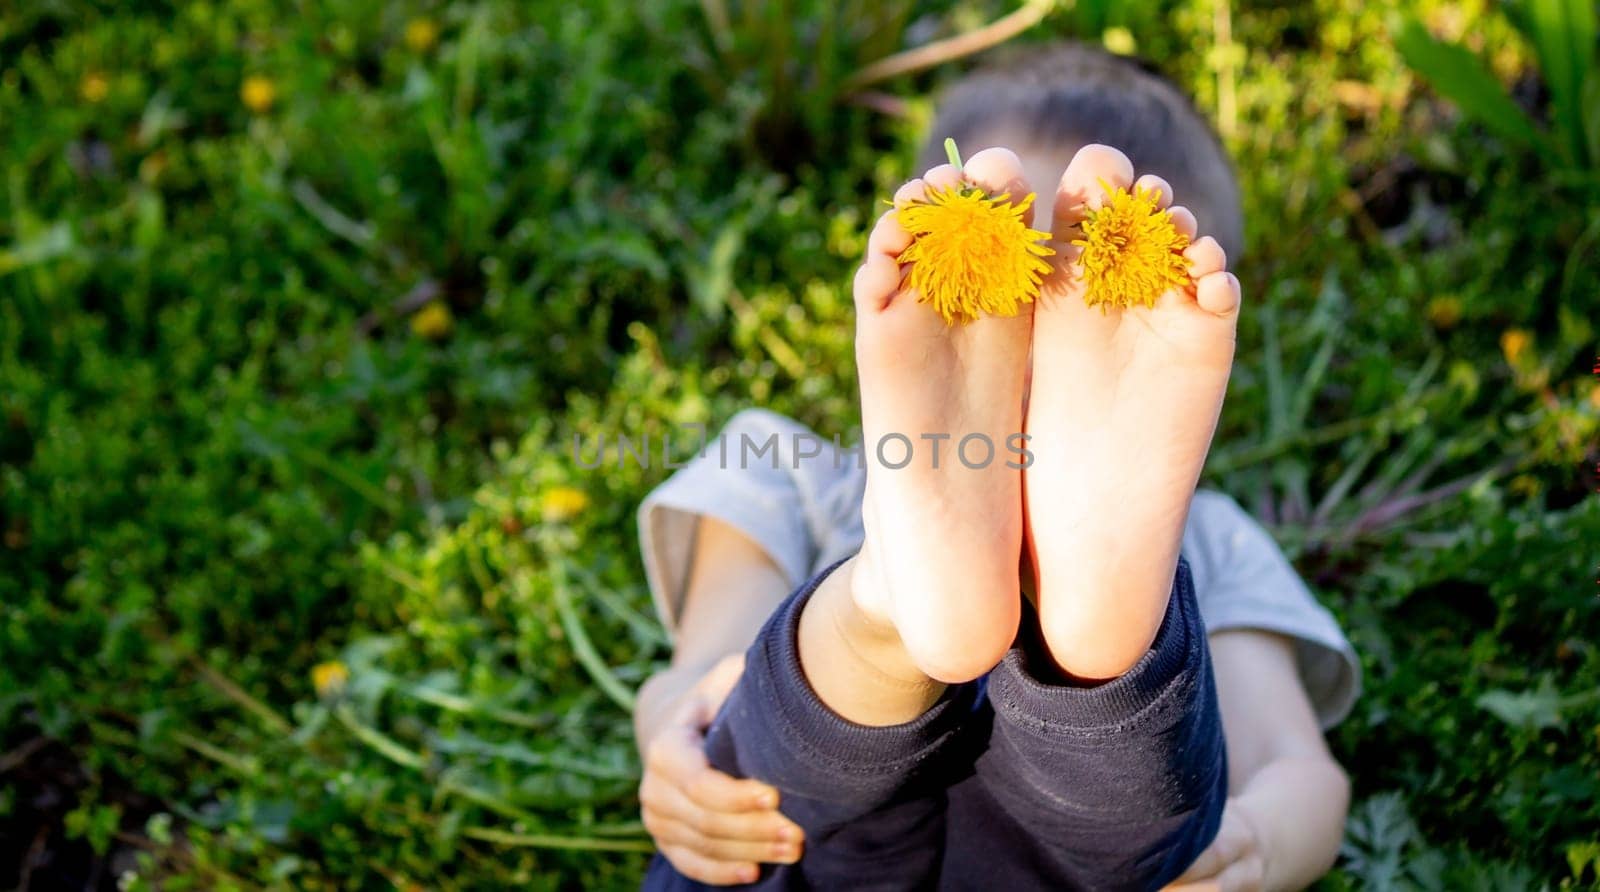 Dandelion baby legs, spring sunny weather. by Anuta23